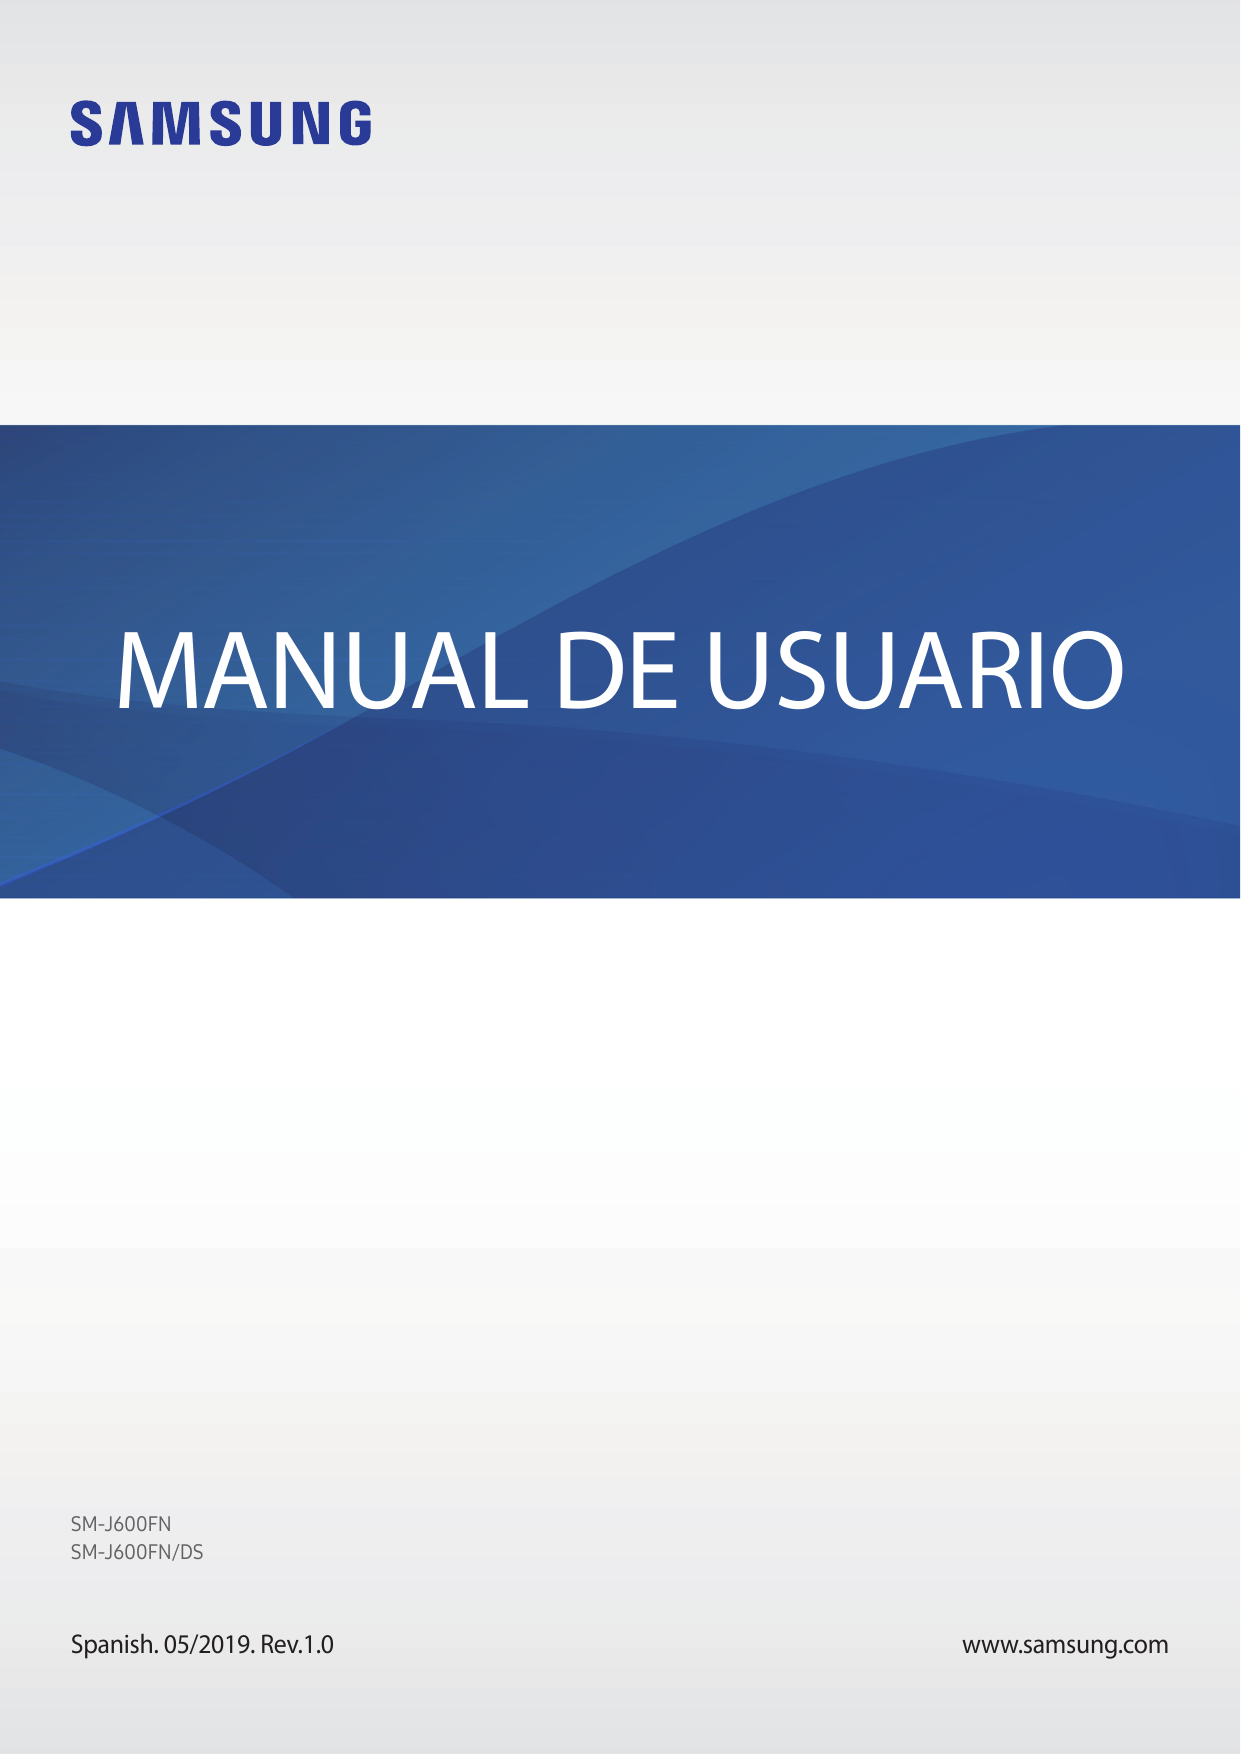 MANUAL DE USUARIOSM-J600FNSM-J600FN/DSSpanish. 05/2019. Rev.1.0www.samsung.com